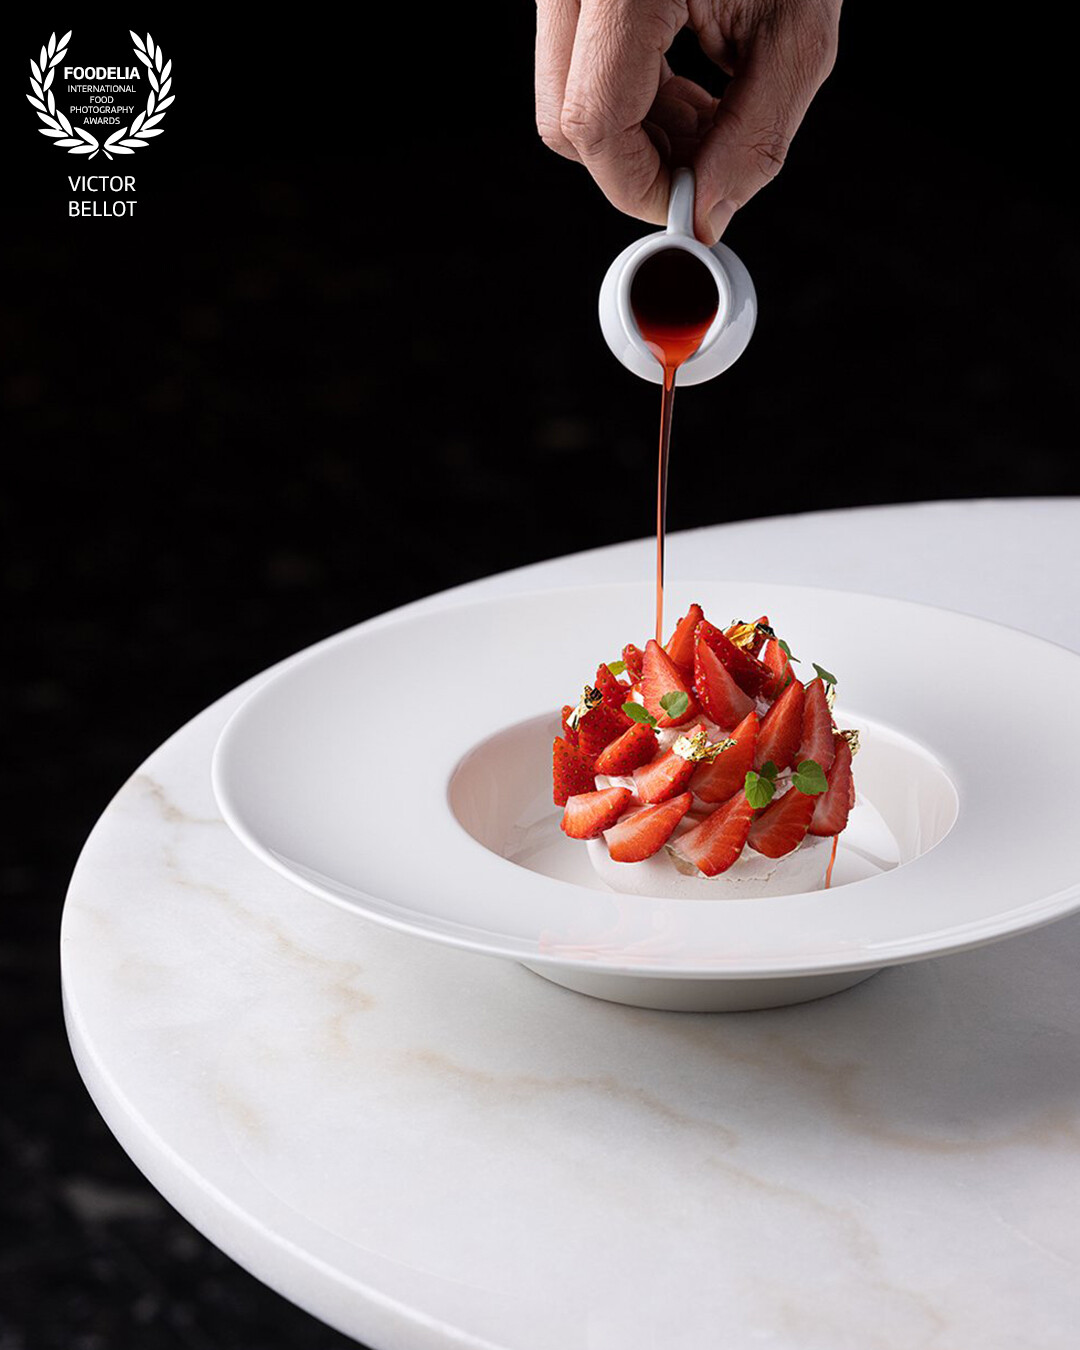 Strawberries and meringue enhanced by pastry chef Nicolas Pelletier of the Voyage Samaritaine restaurant.